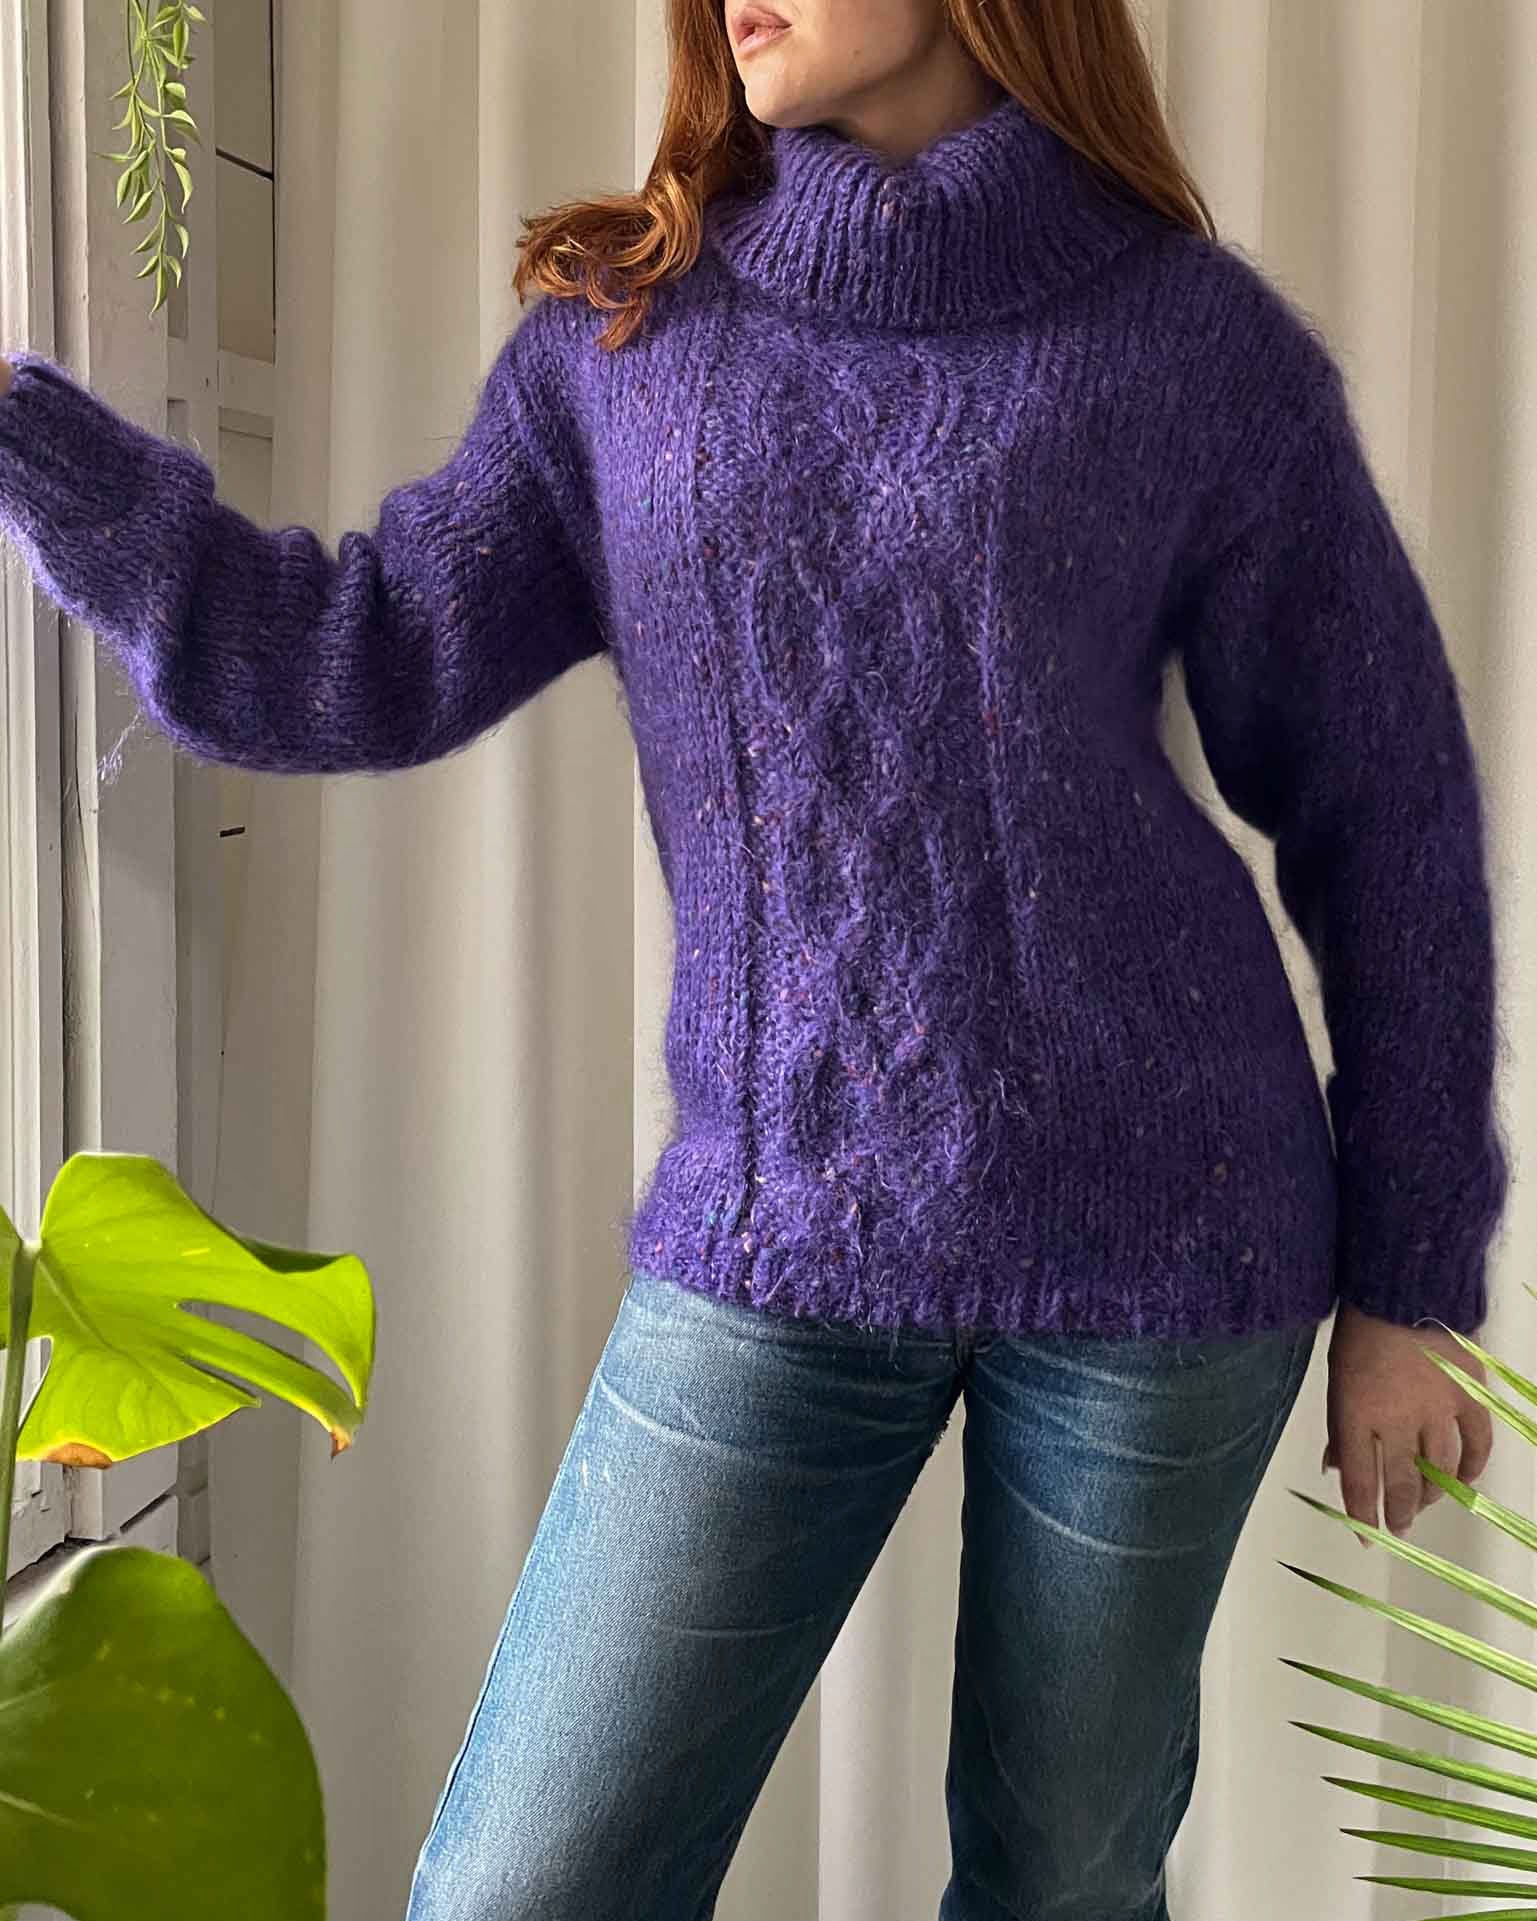 Lucky Brand Purple Knit Tops